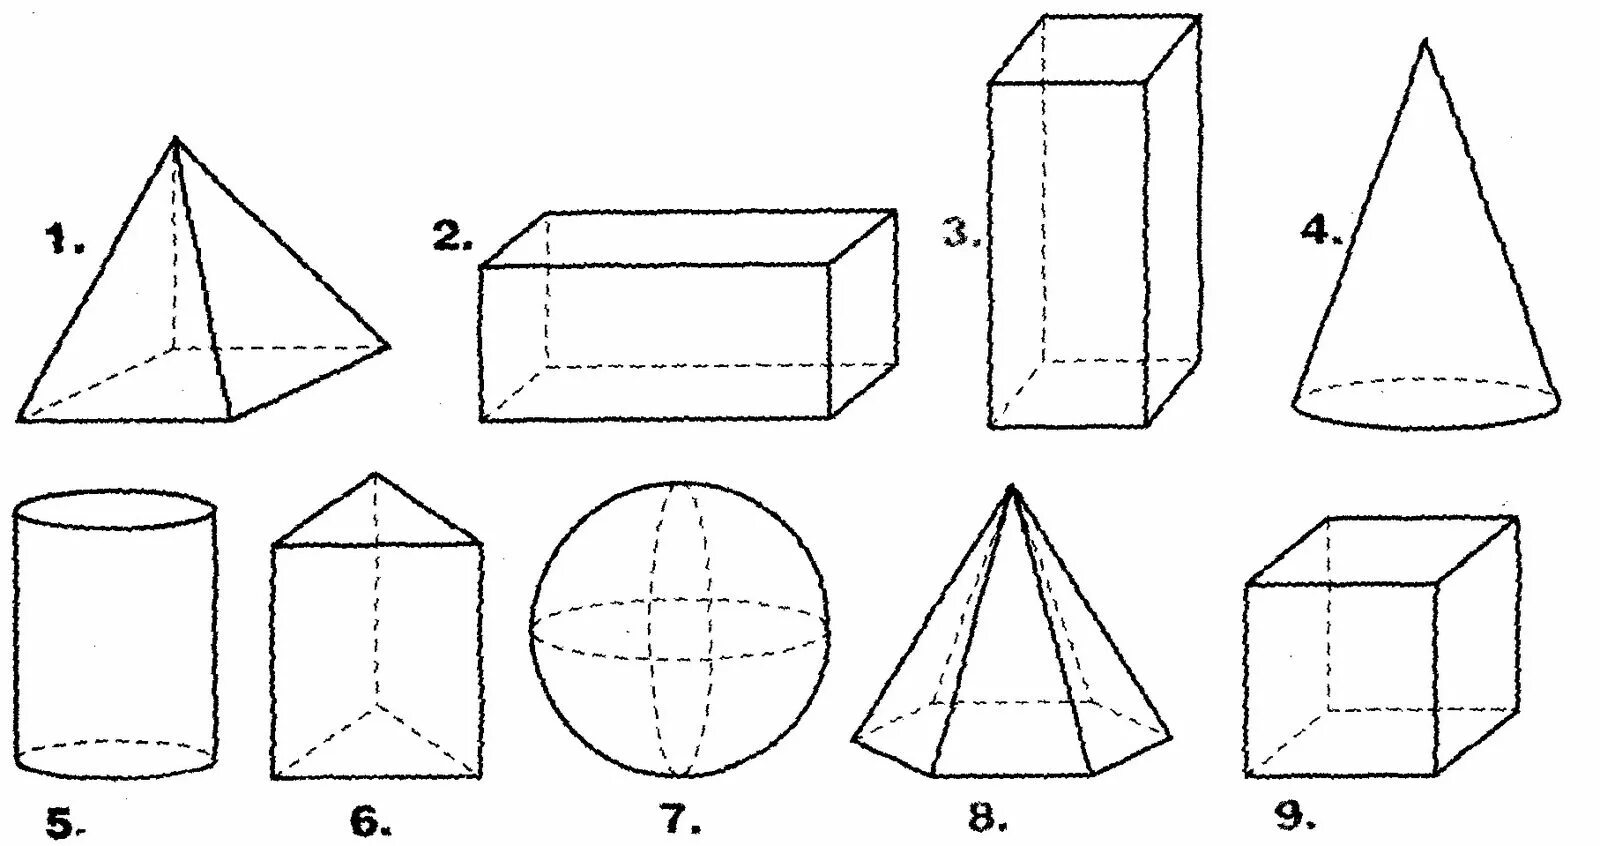 Пирамида призма конус сфера. Шар, куб, Призма, параллелепипед, цилиндр, конус, пирамида). Призма пирамида цилиндр конус. Геометрические тела цилиндр конус пирамида шар куб параллелепипед. Куб параллелепипед Призма пирамида.